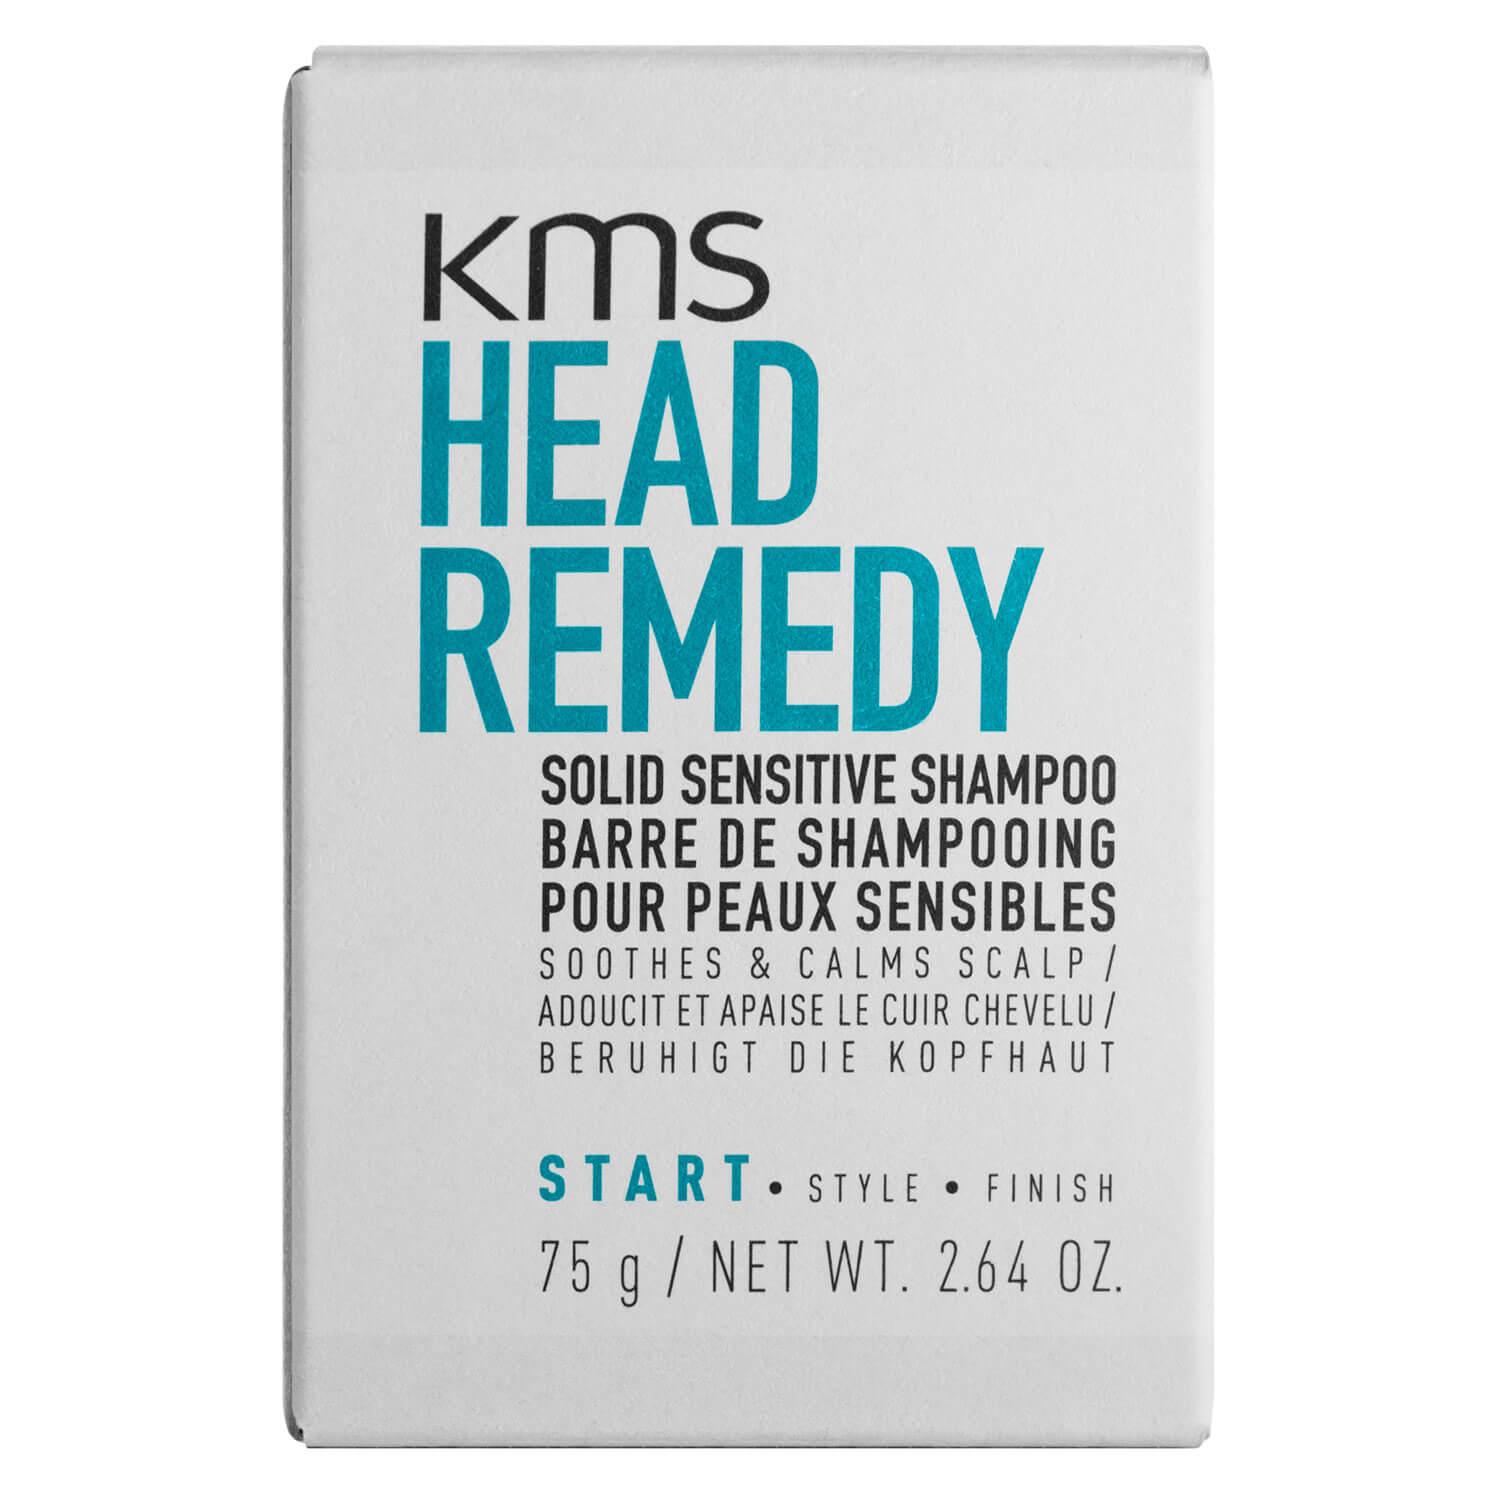 Headremedy - Solid Sensitive Shampoo